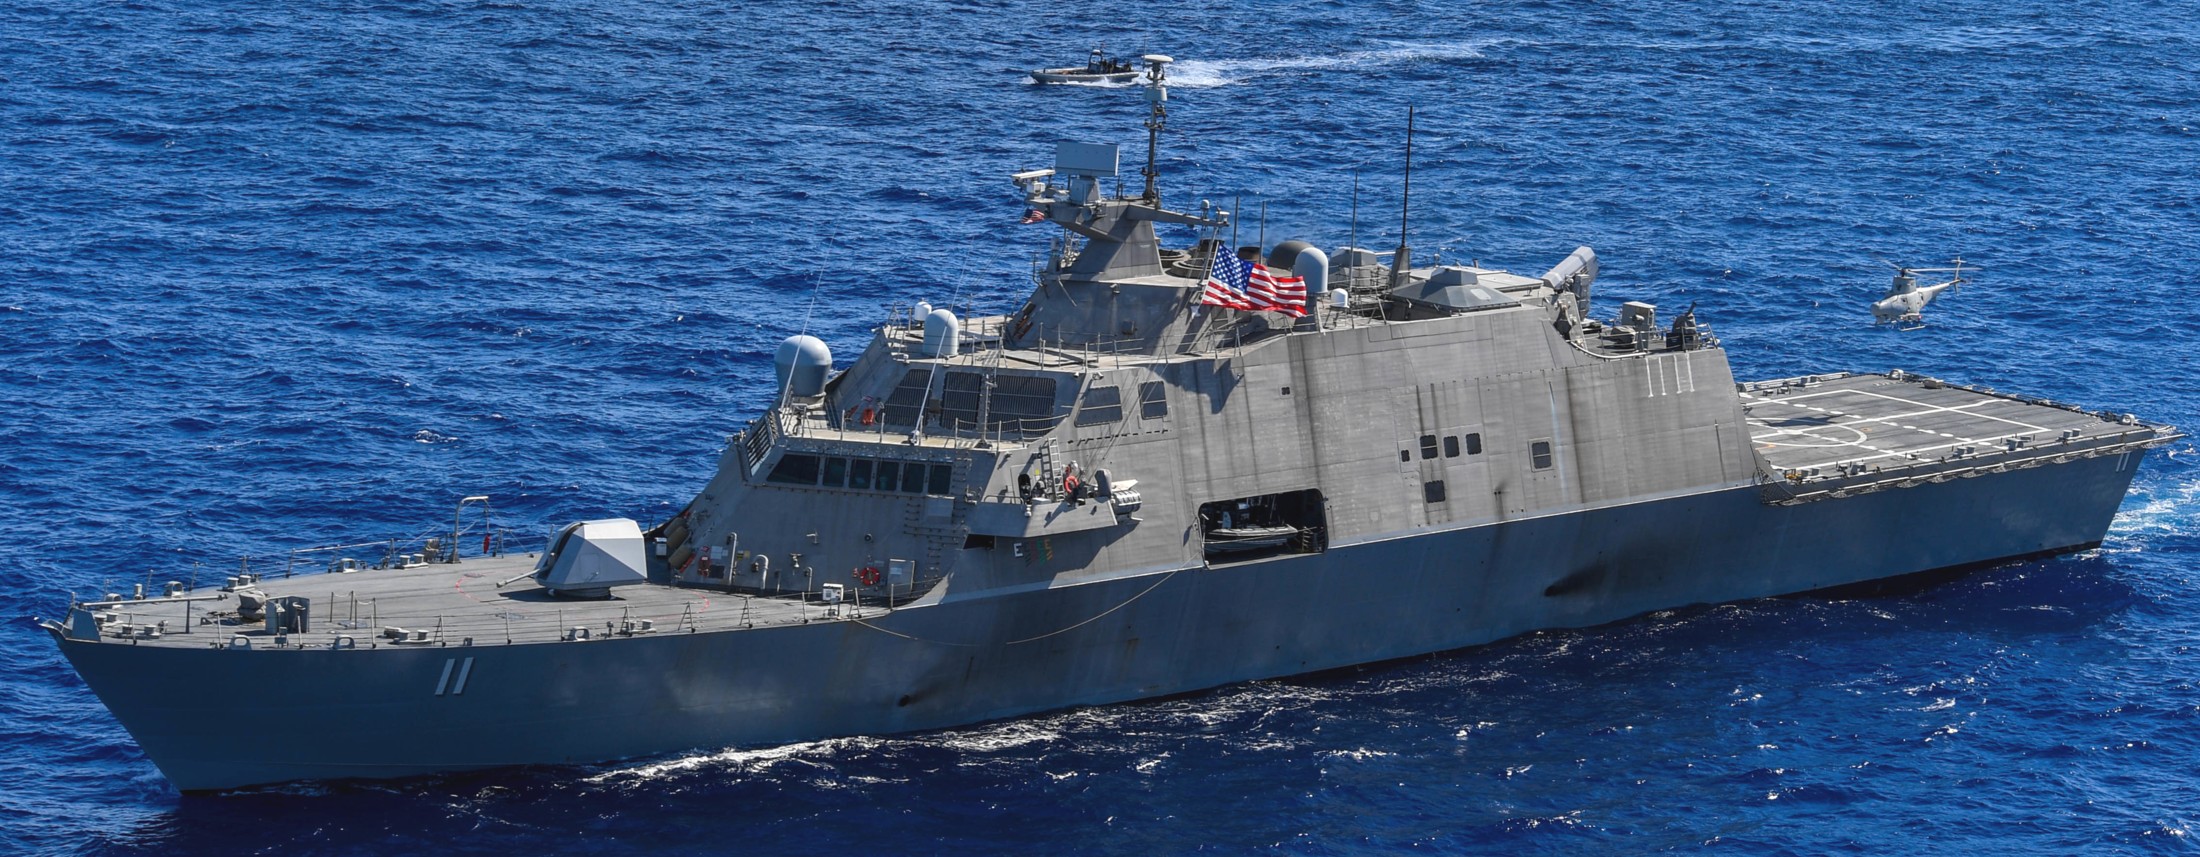 lcs-11 uss sioux city freedom class littoral combat ship us navy 42 atlantic ocean